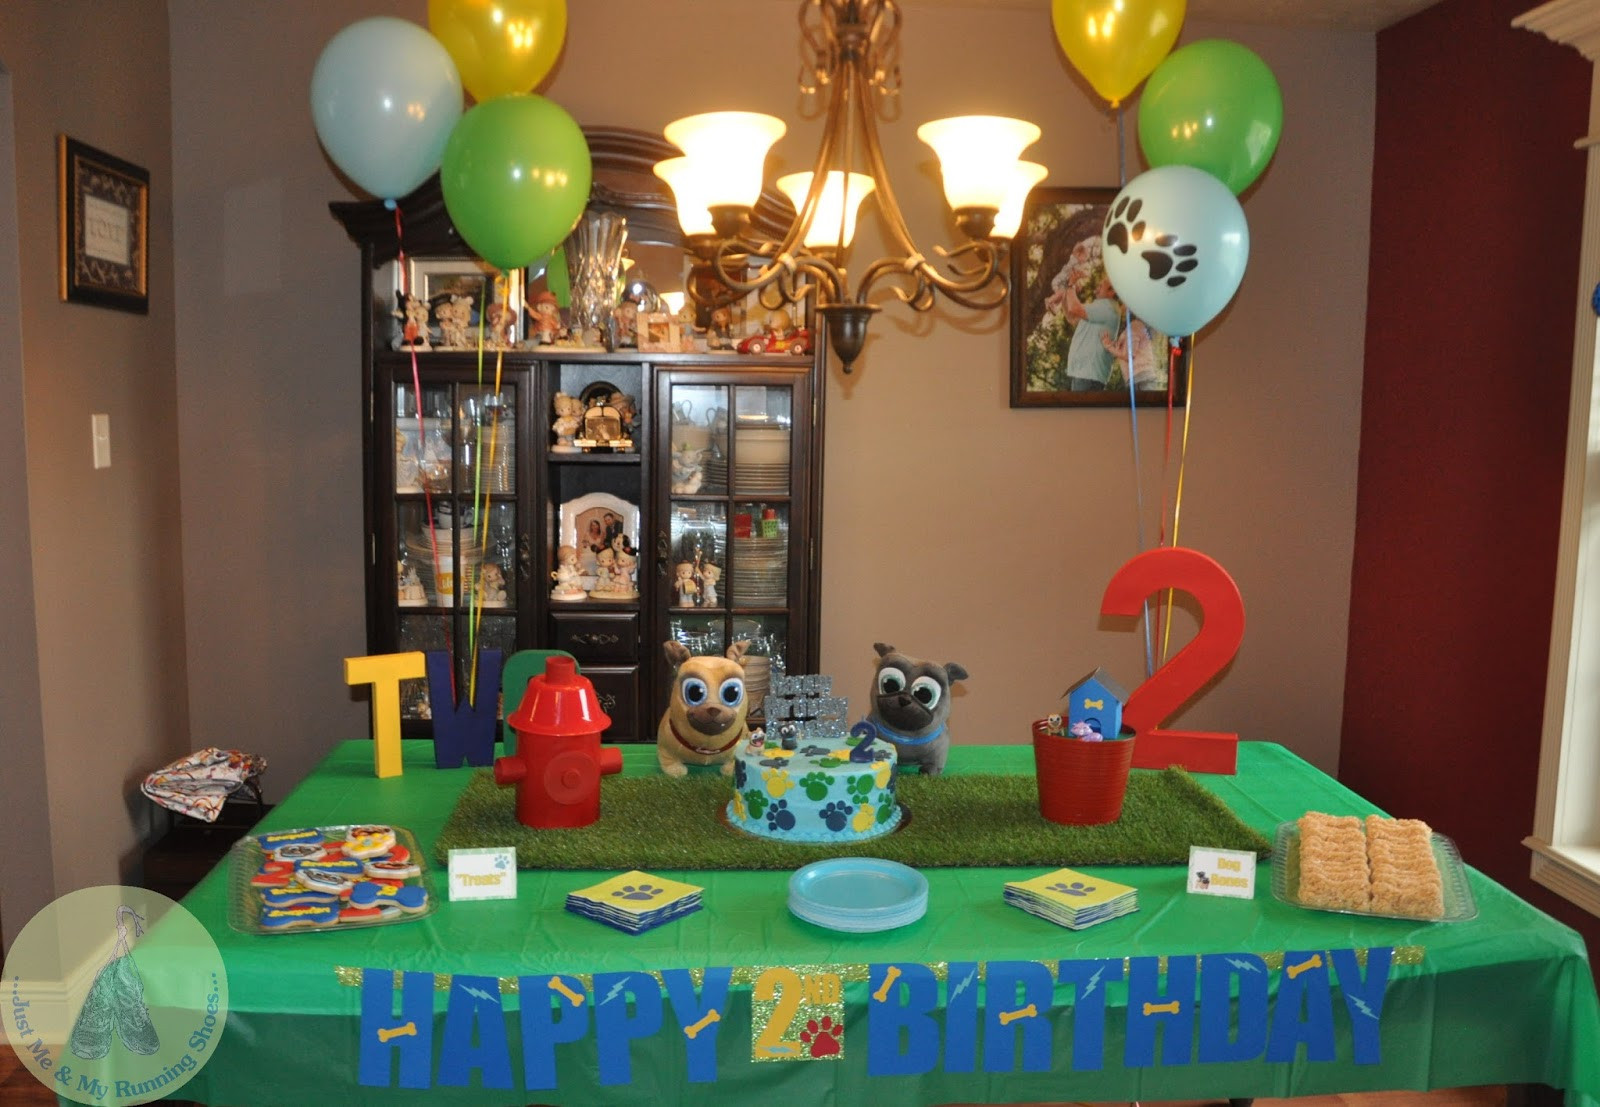 Puppy Birthday Party Supplies
 Puppy Dog Pals Birthday Party